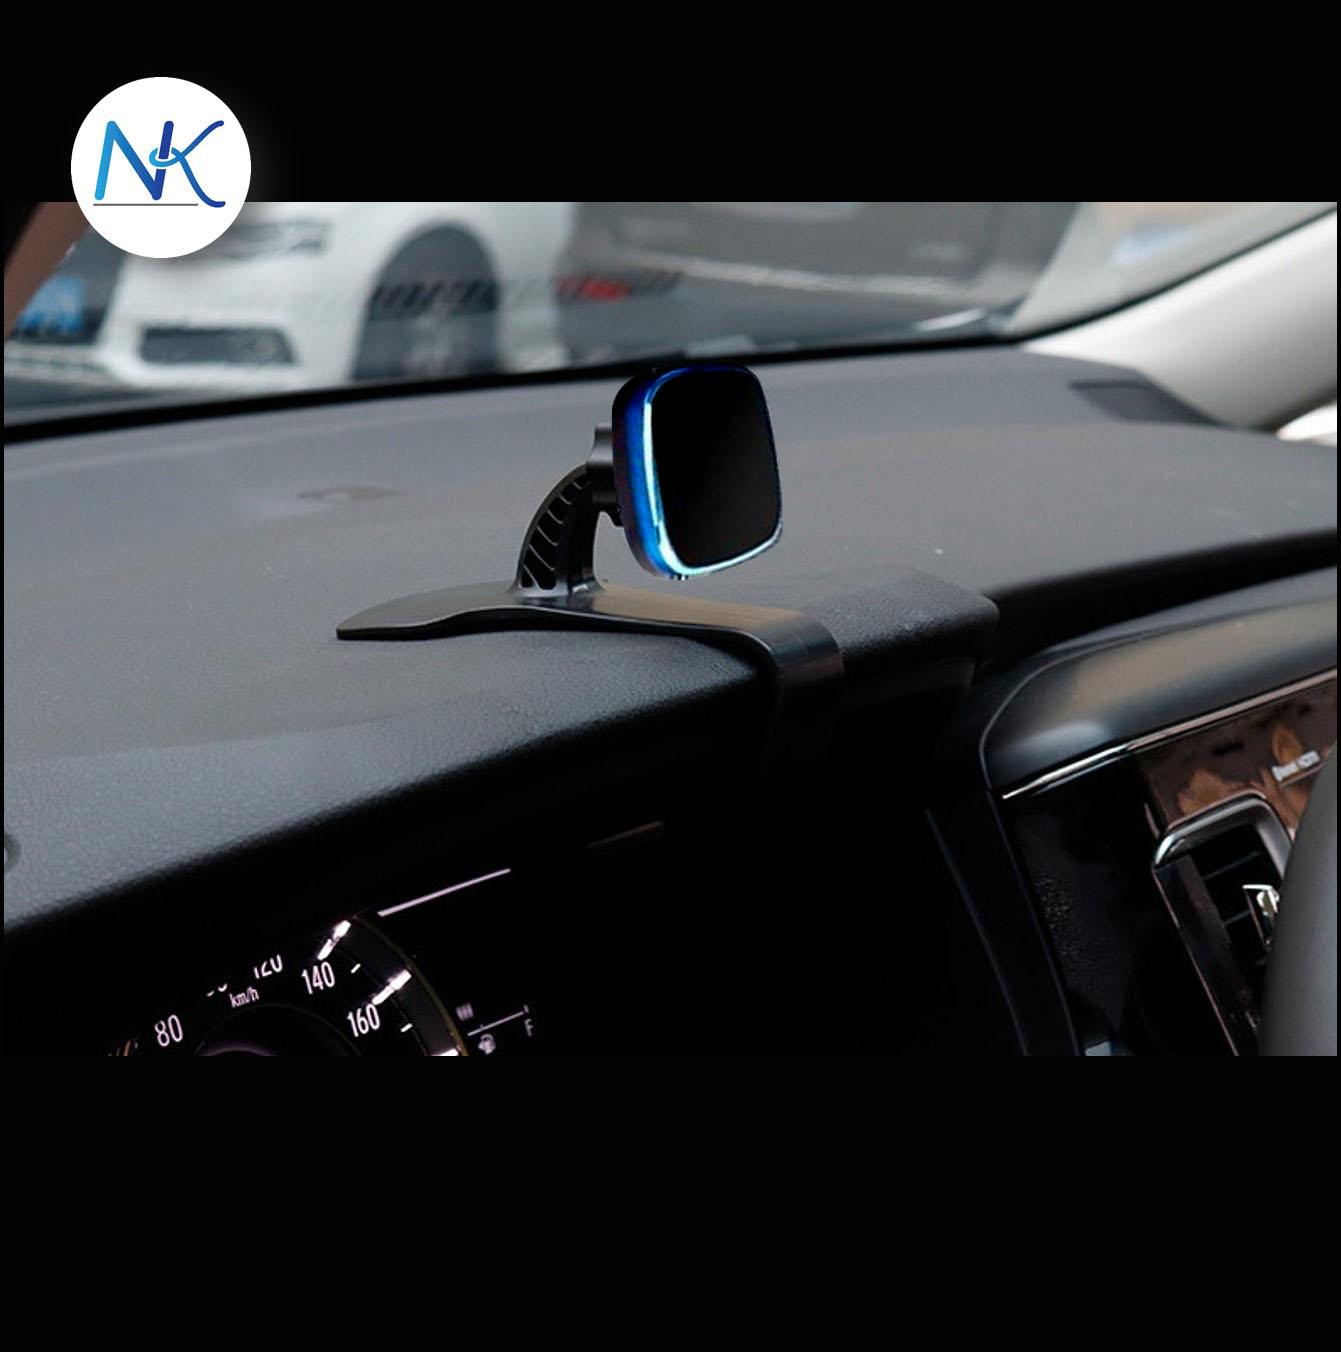 nkshop ที่วางโทรศัพท์ในรถ ที่ยึดโทรศัพท์ในรถ แท่นวางโทรศัพท์ในรถ หมุนปรับระดับได้ หนีบคอนโซล แม่เหล็ก